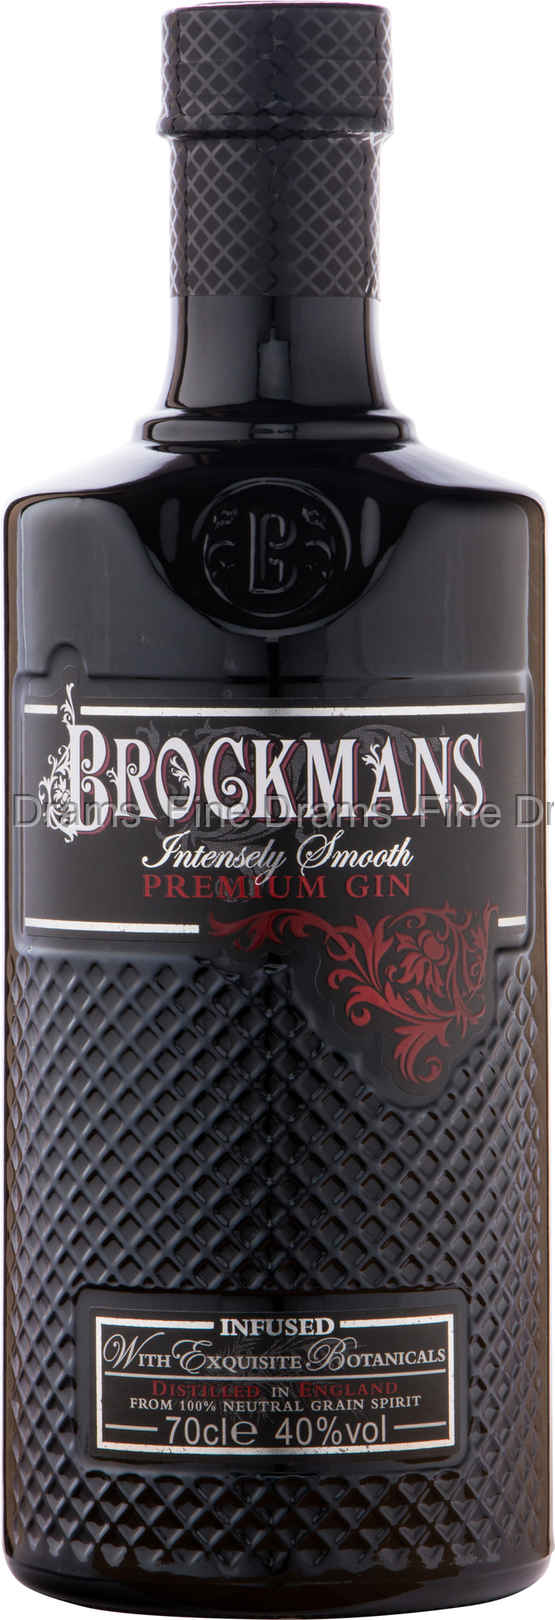 Brockmans Dry Gin